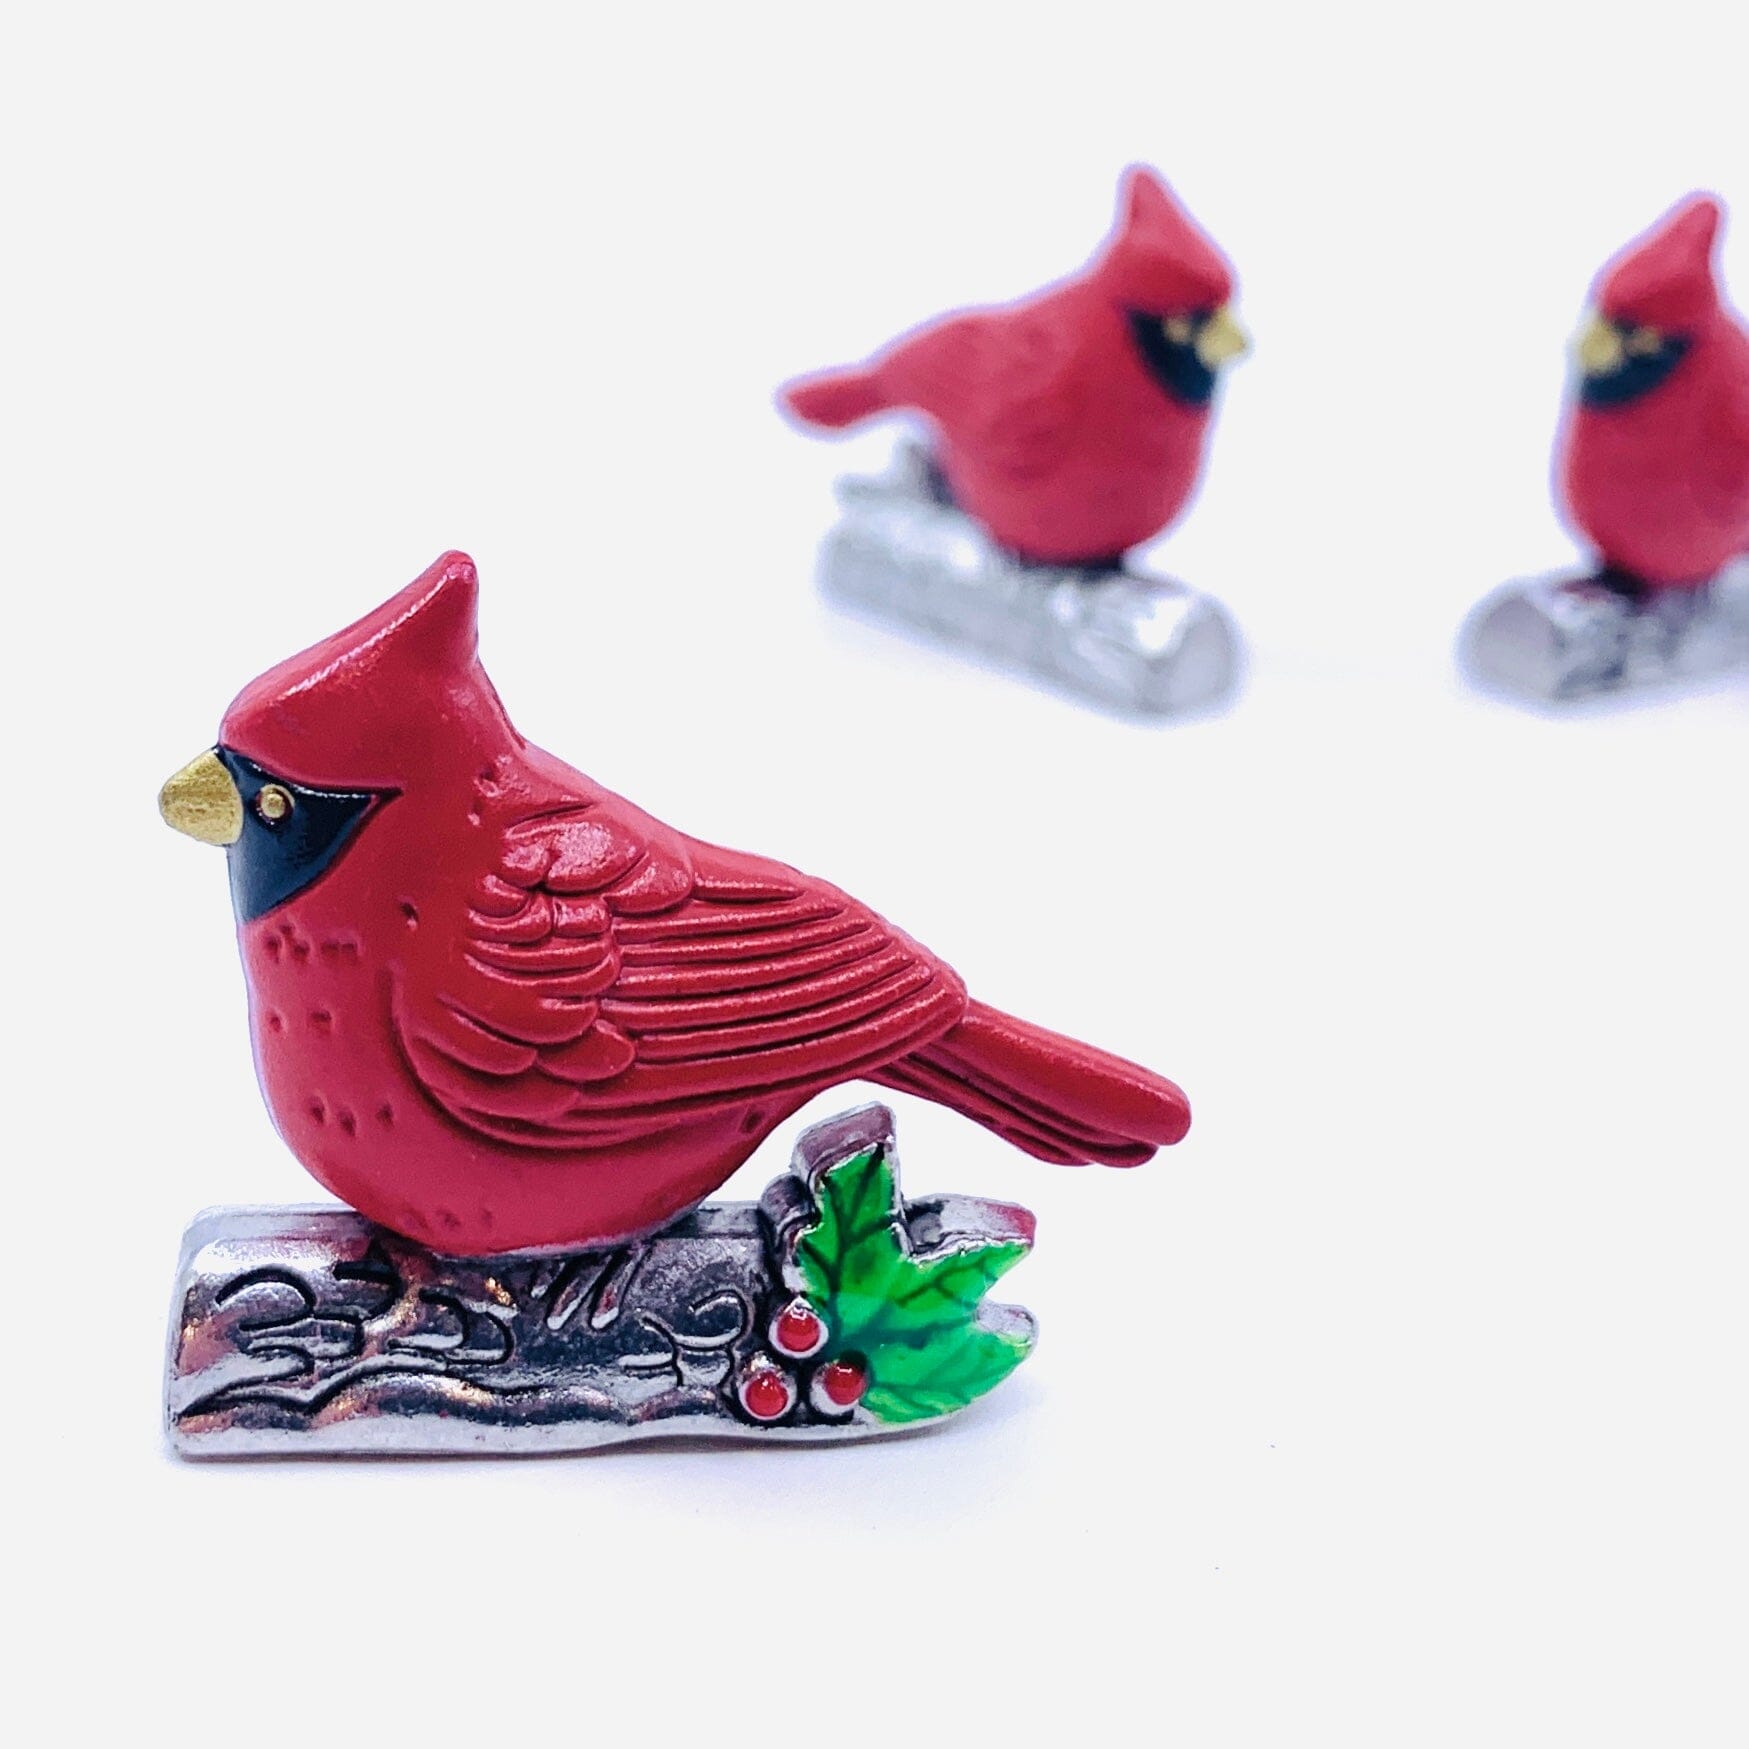 The Christmas Cardinal from Heaven Pocket Charm PT16 Miniature GANZ 